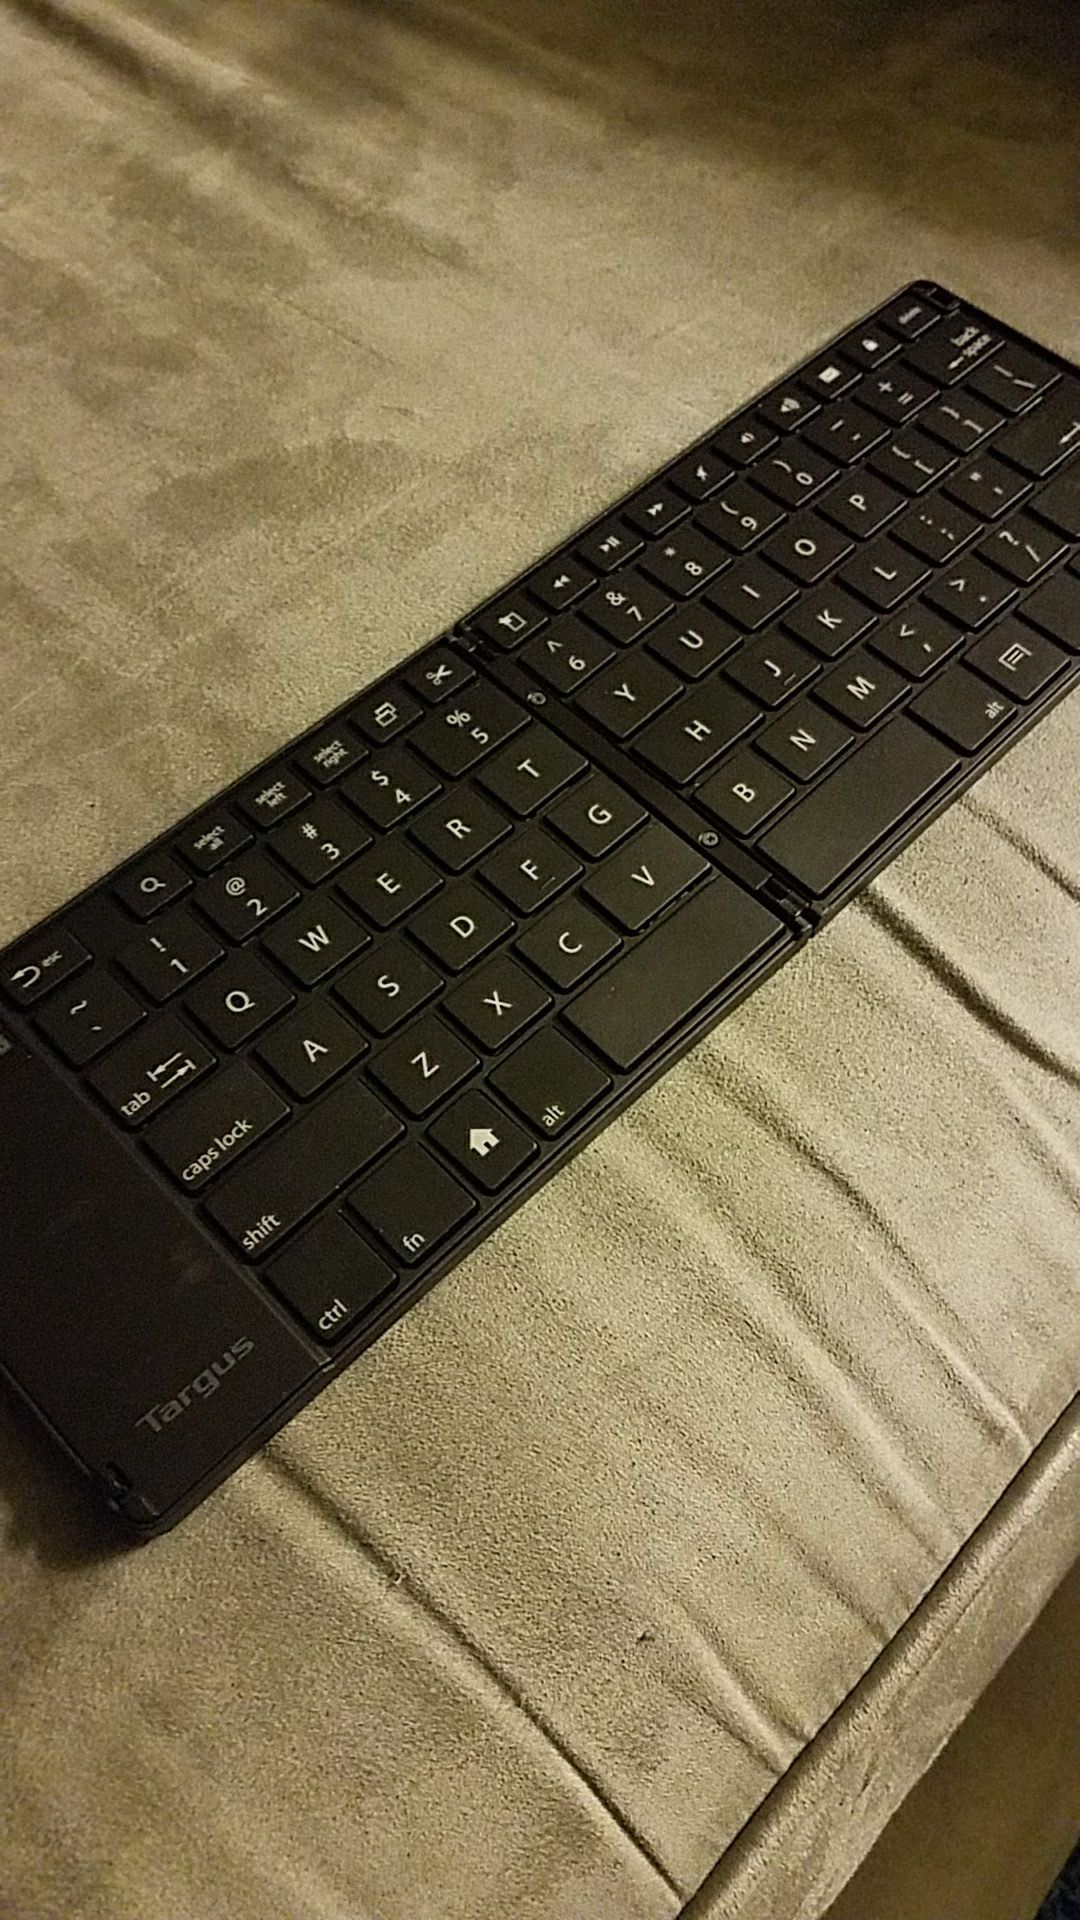 Portable bluetooth keyboard